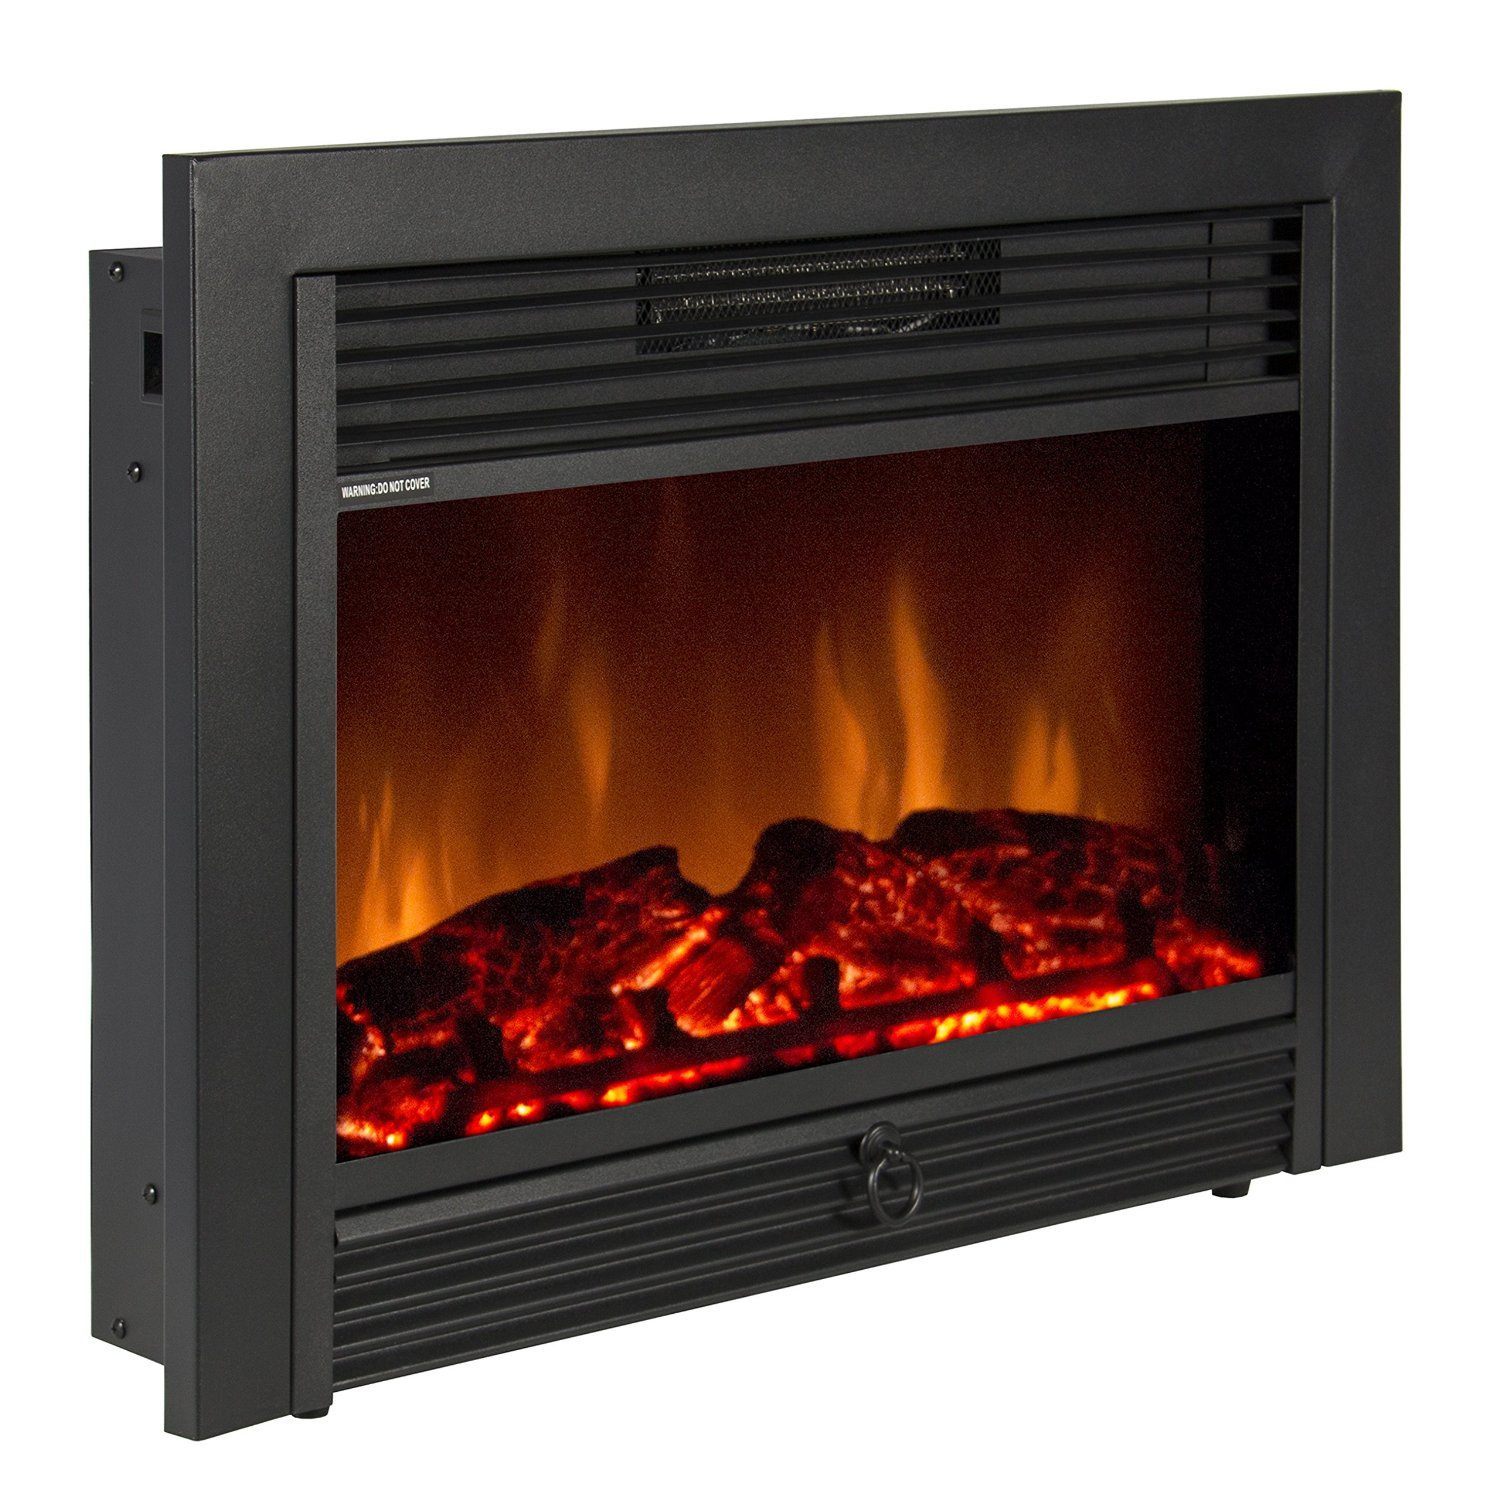 Duraflame Electric Fireplace Insert Beautiful Best Fireplace Inserts Reviews 2019 – Gas Wood Electric